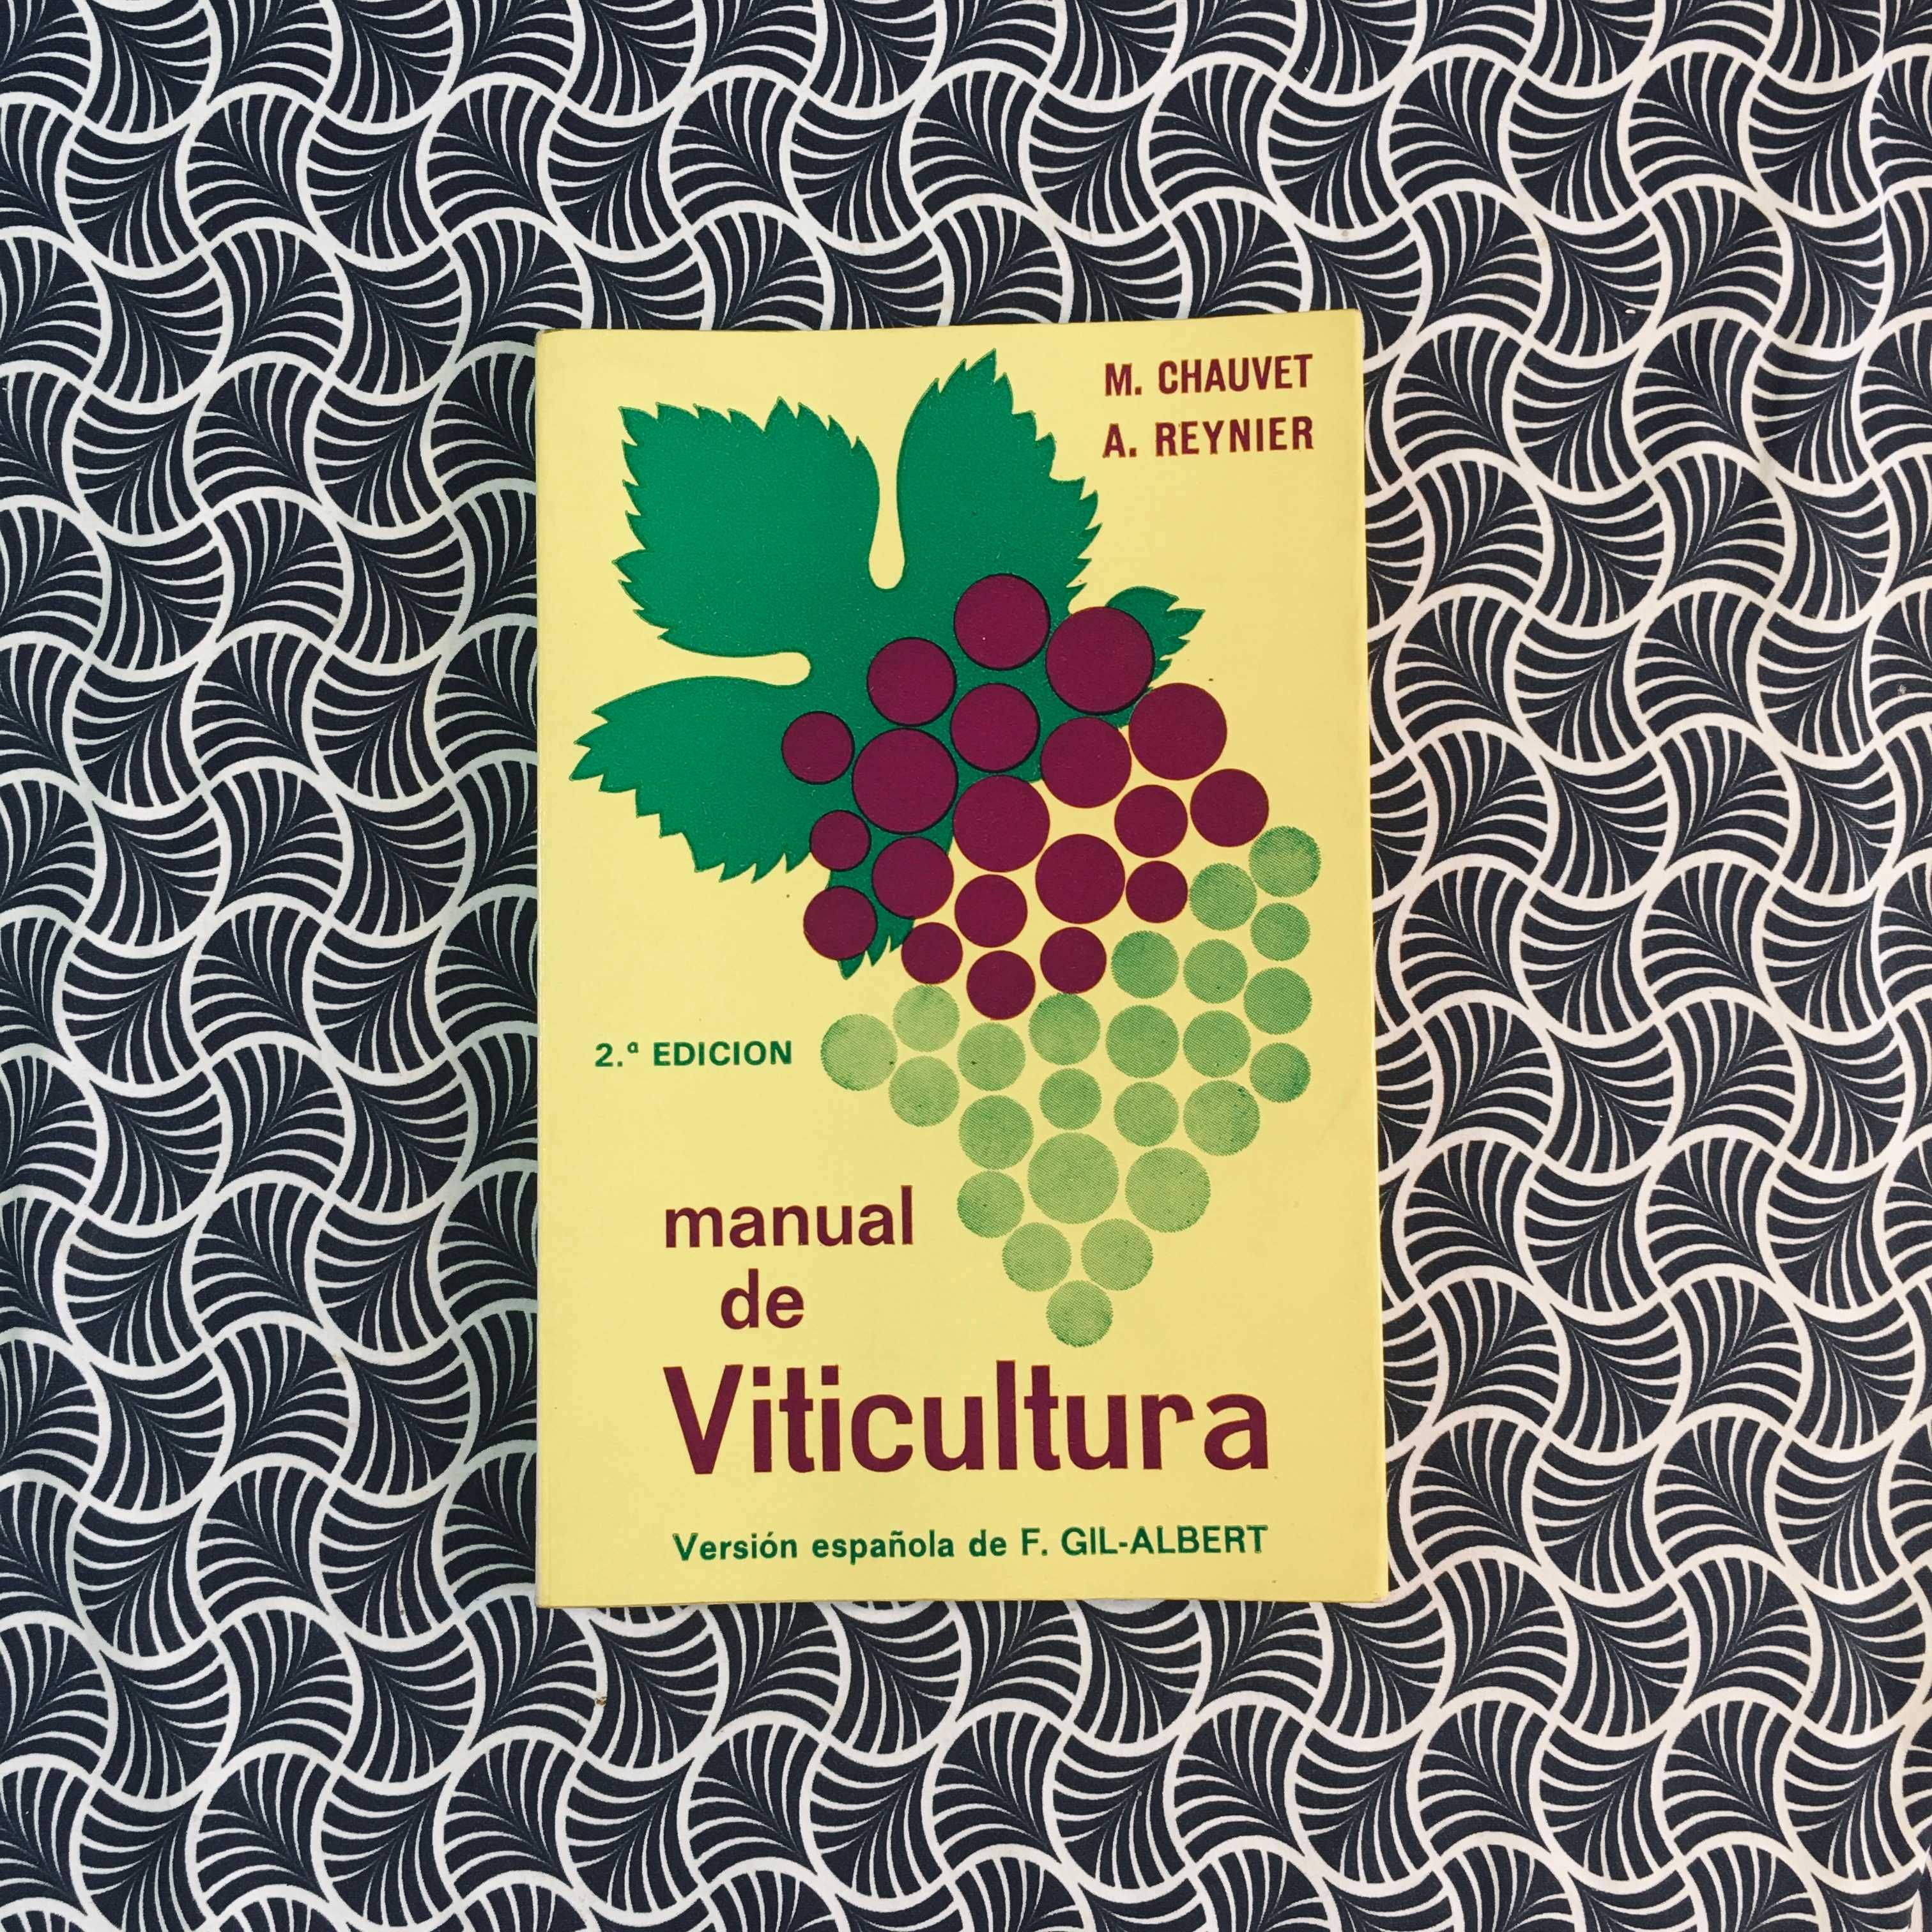 Manual de Viticultura - M. Chauvet & A. Reynier